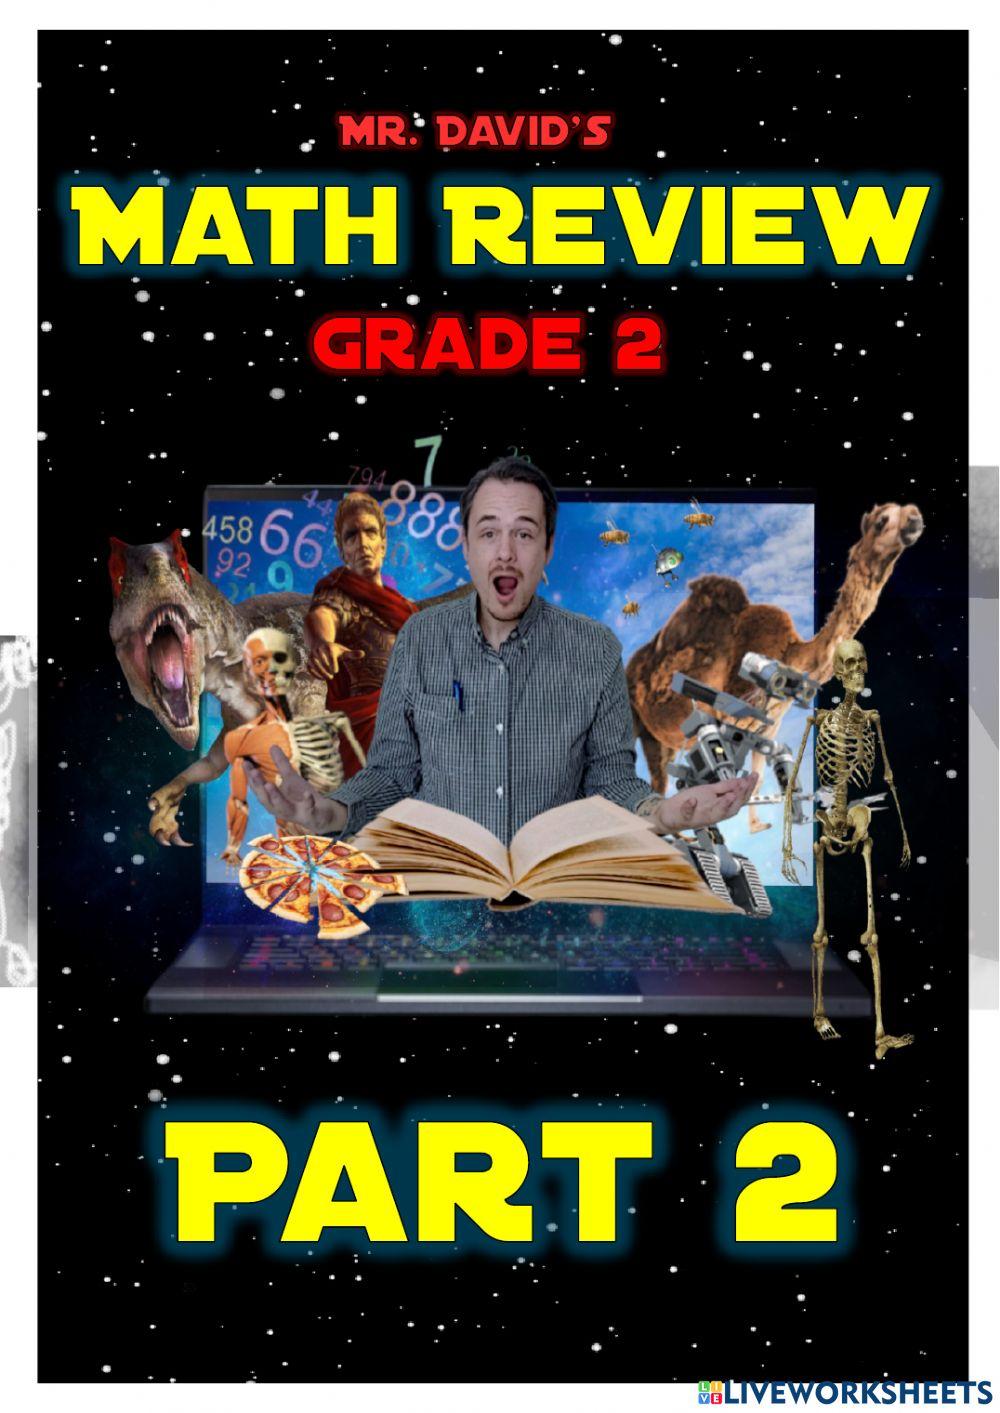 Cambridge grade 2 maths review